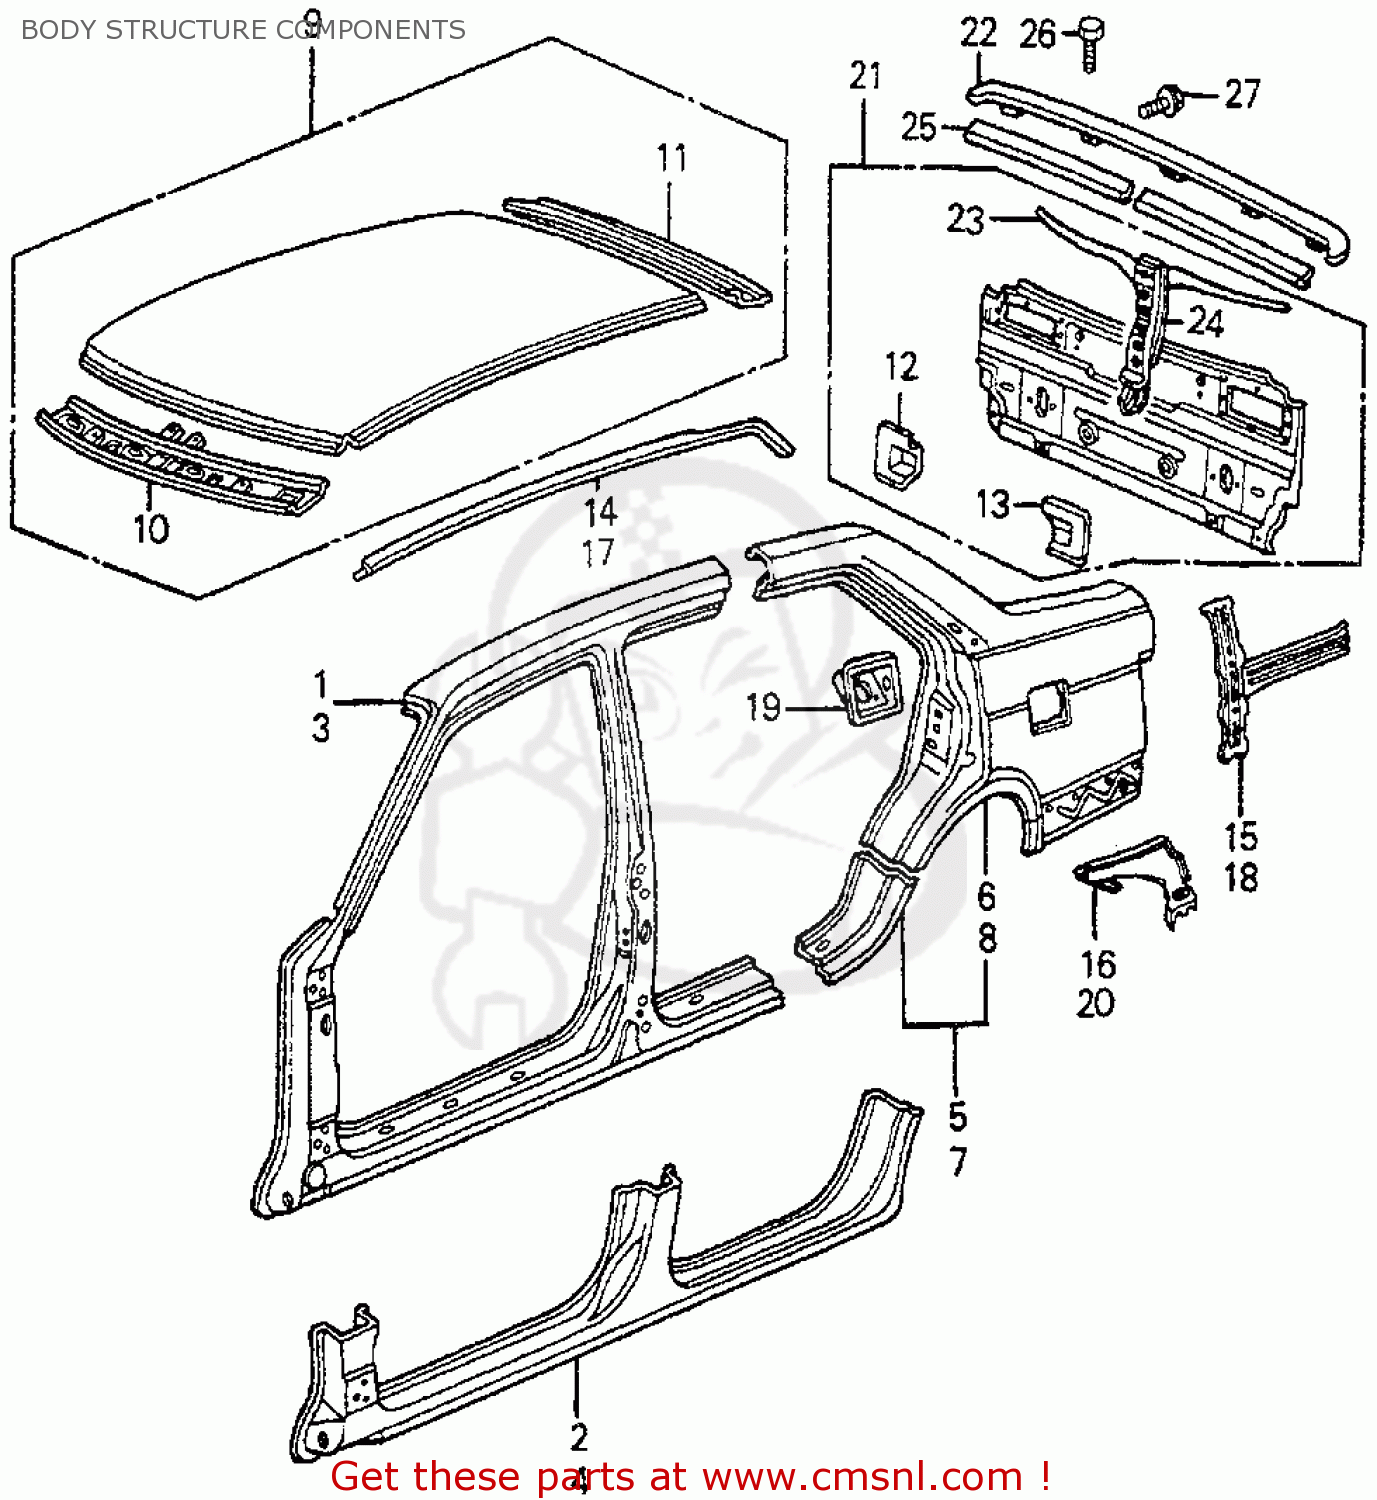 Honda Crv Body Parts Diagram